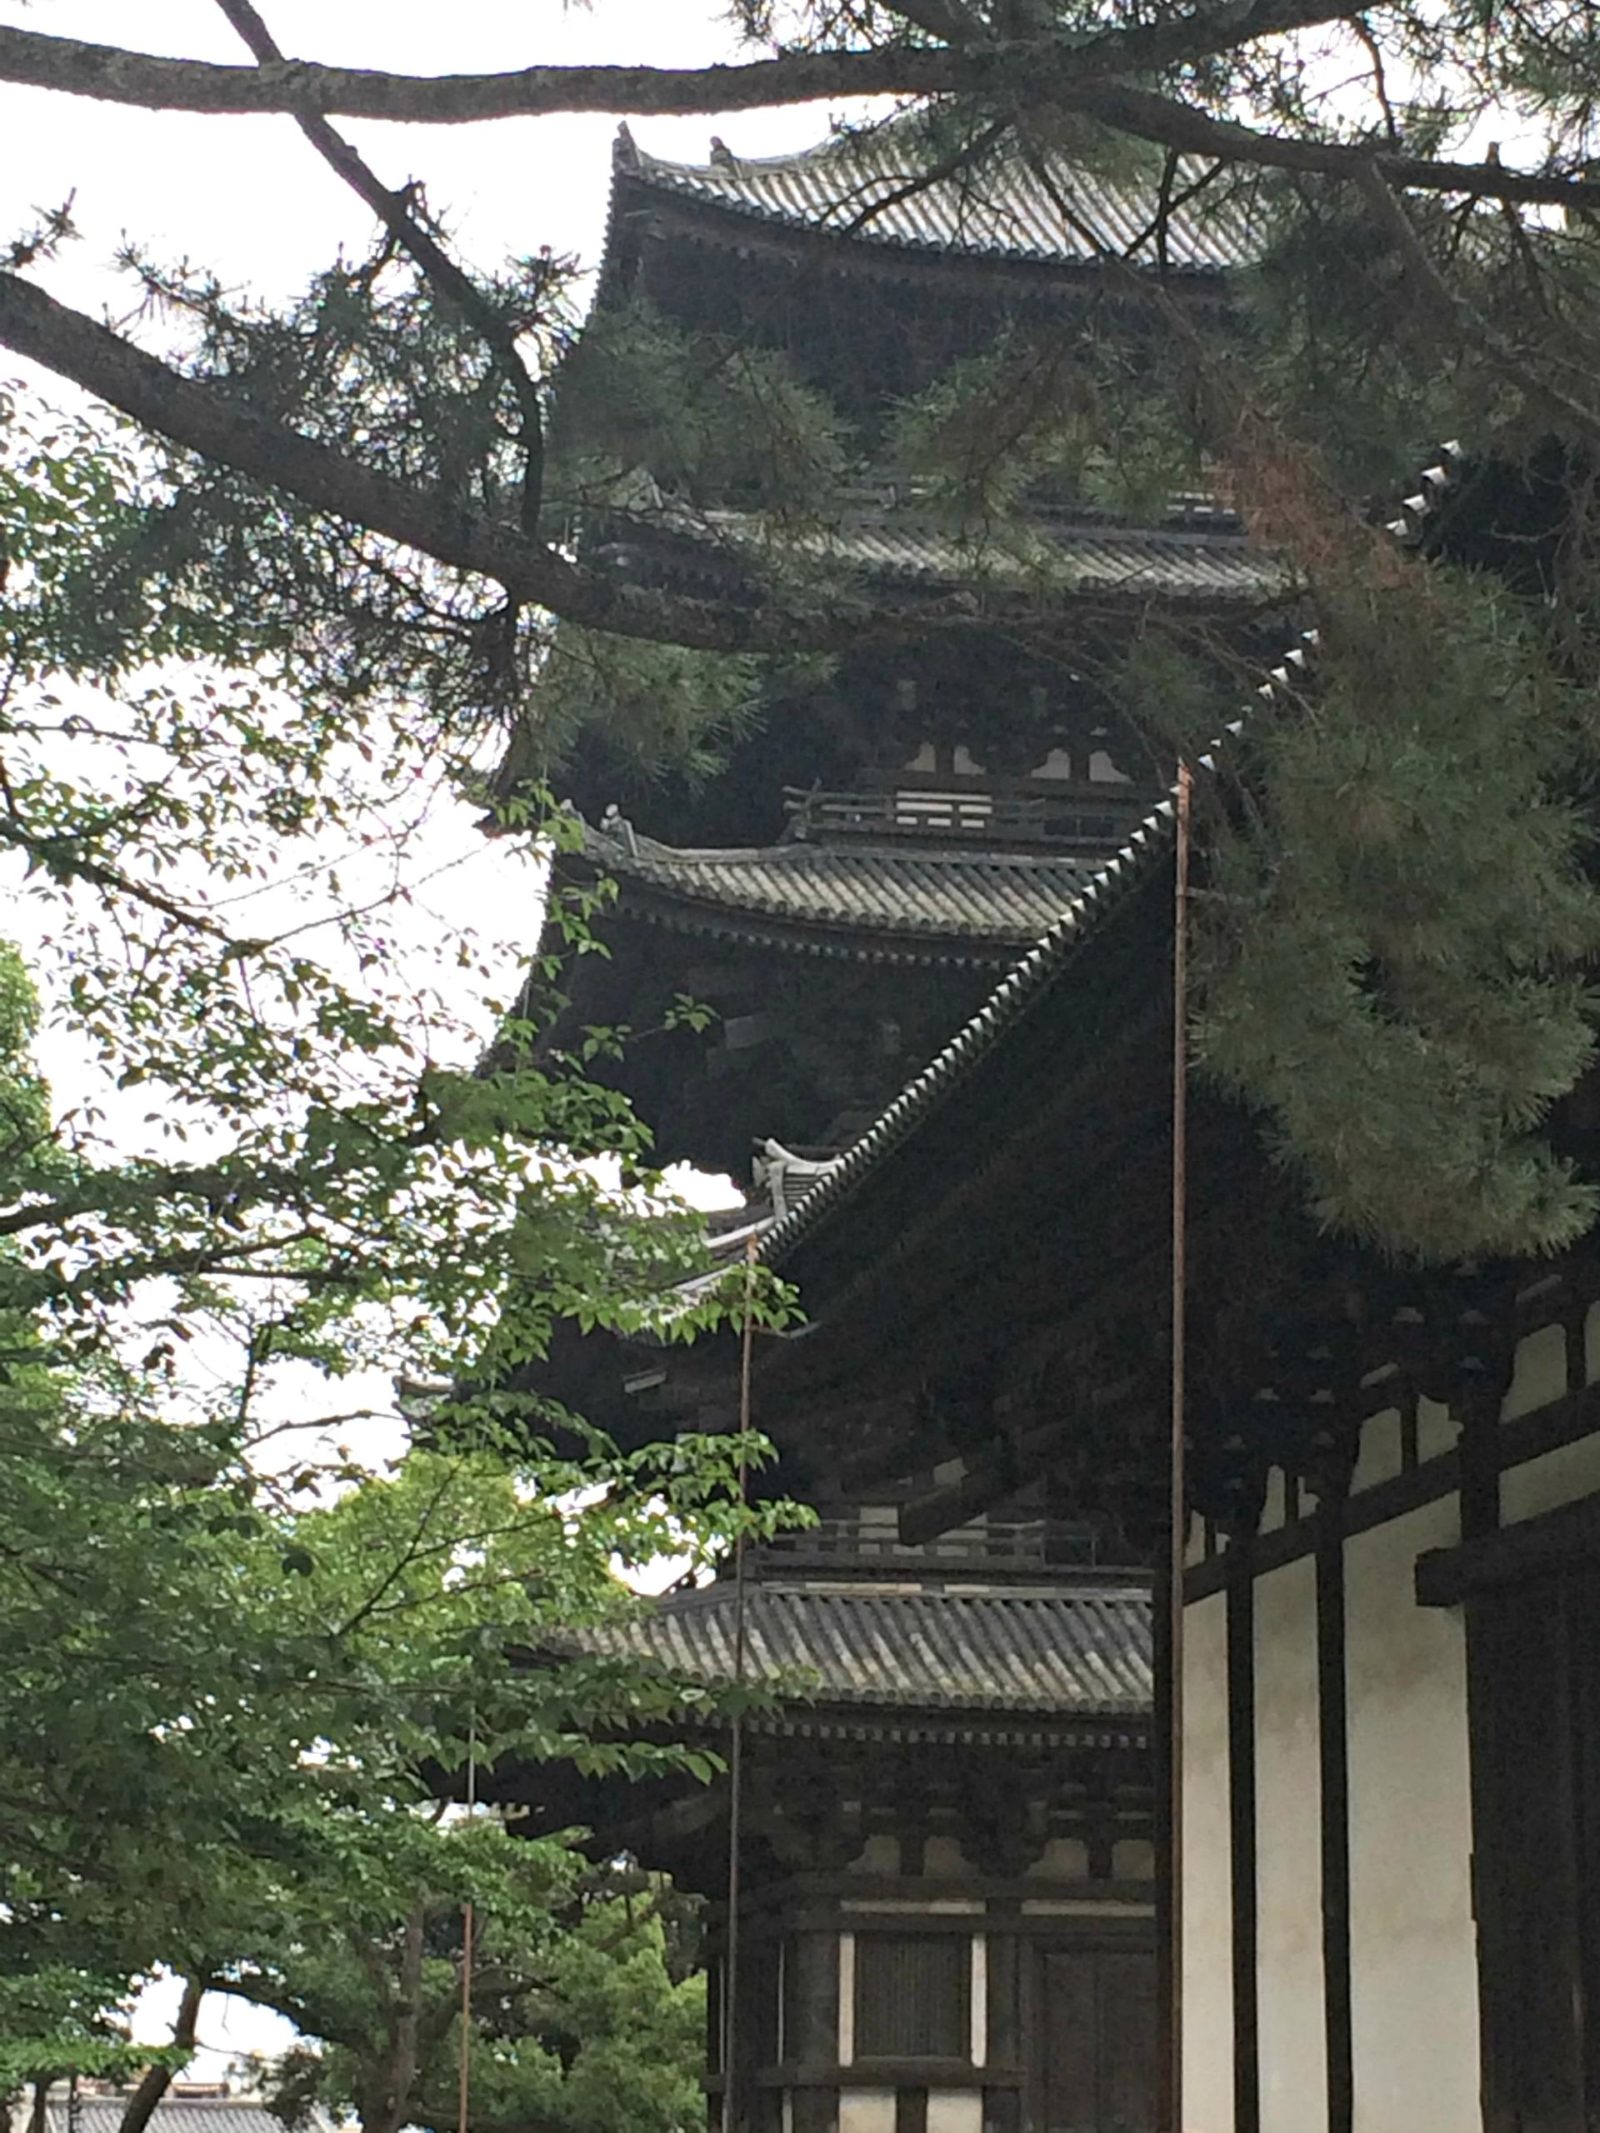 Kofukuji Temple: the pagoda at Kofukuji Temple in Nara is the second largest in Japan